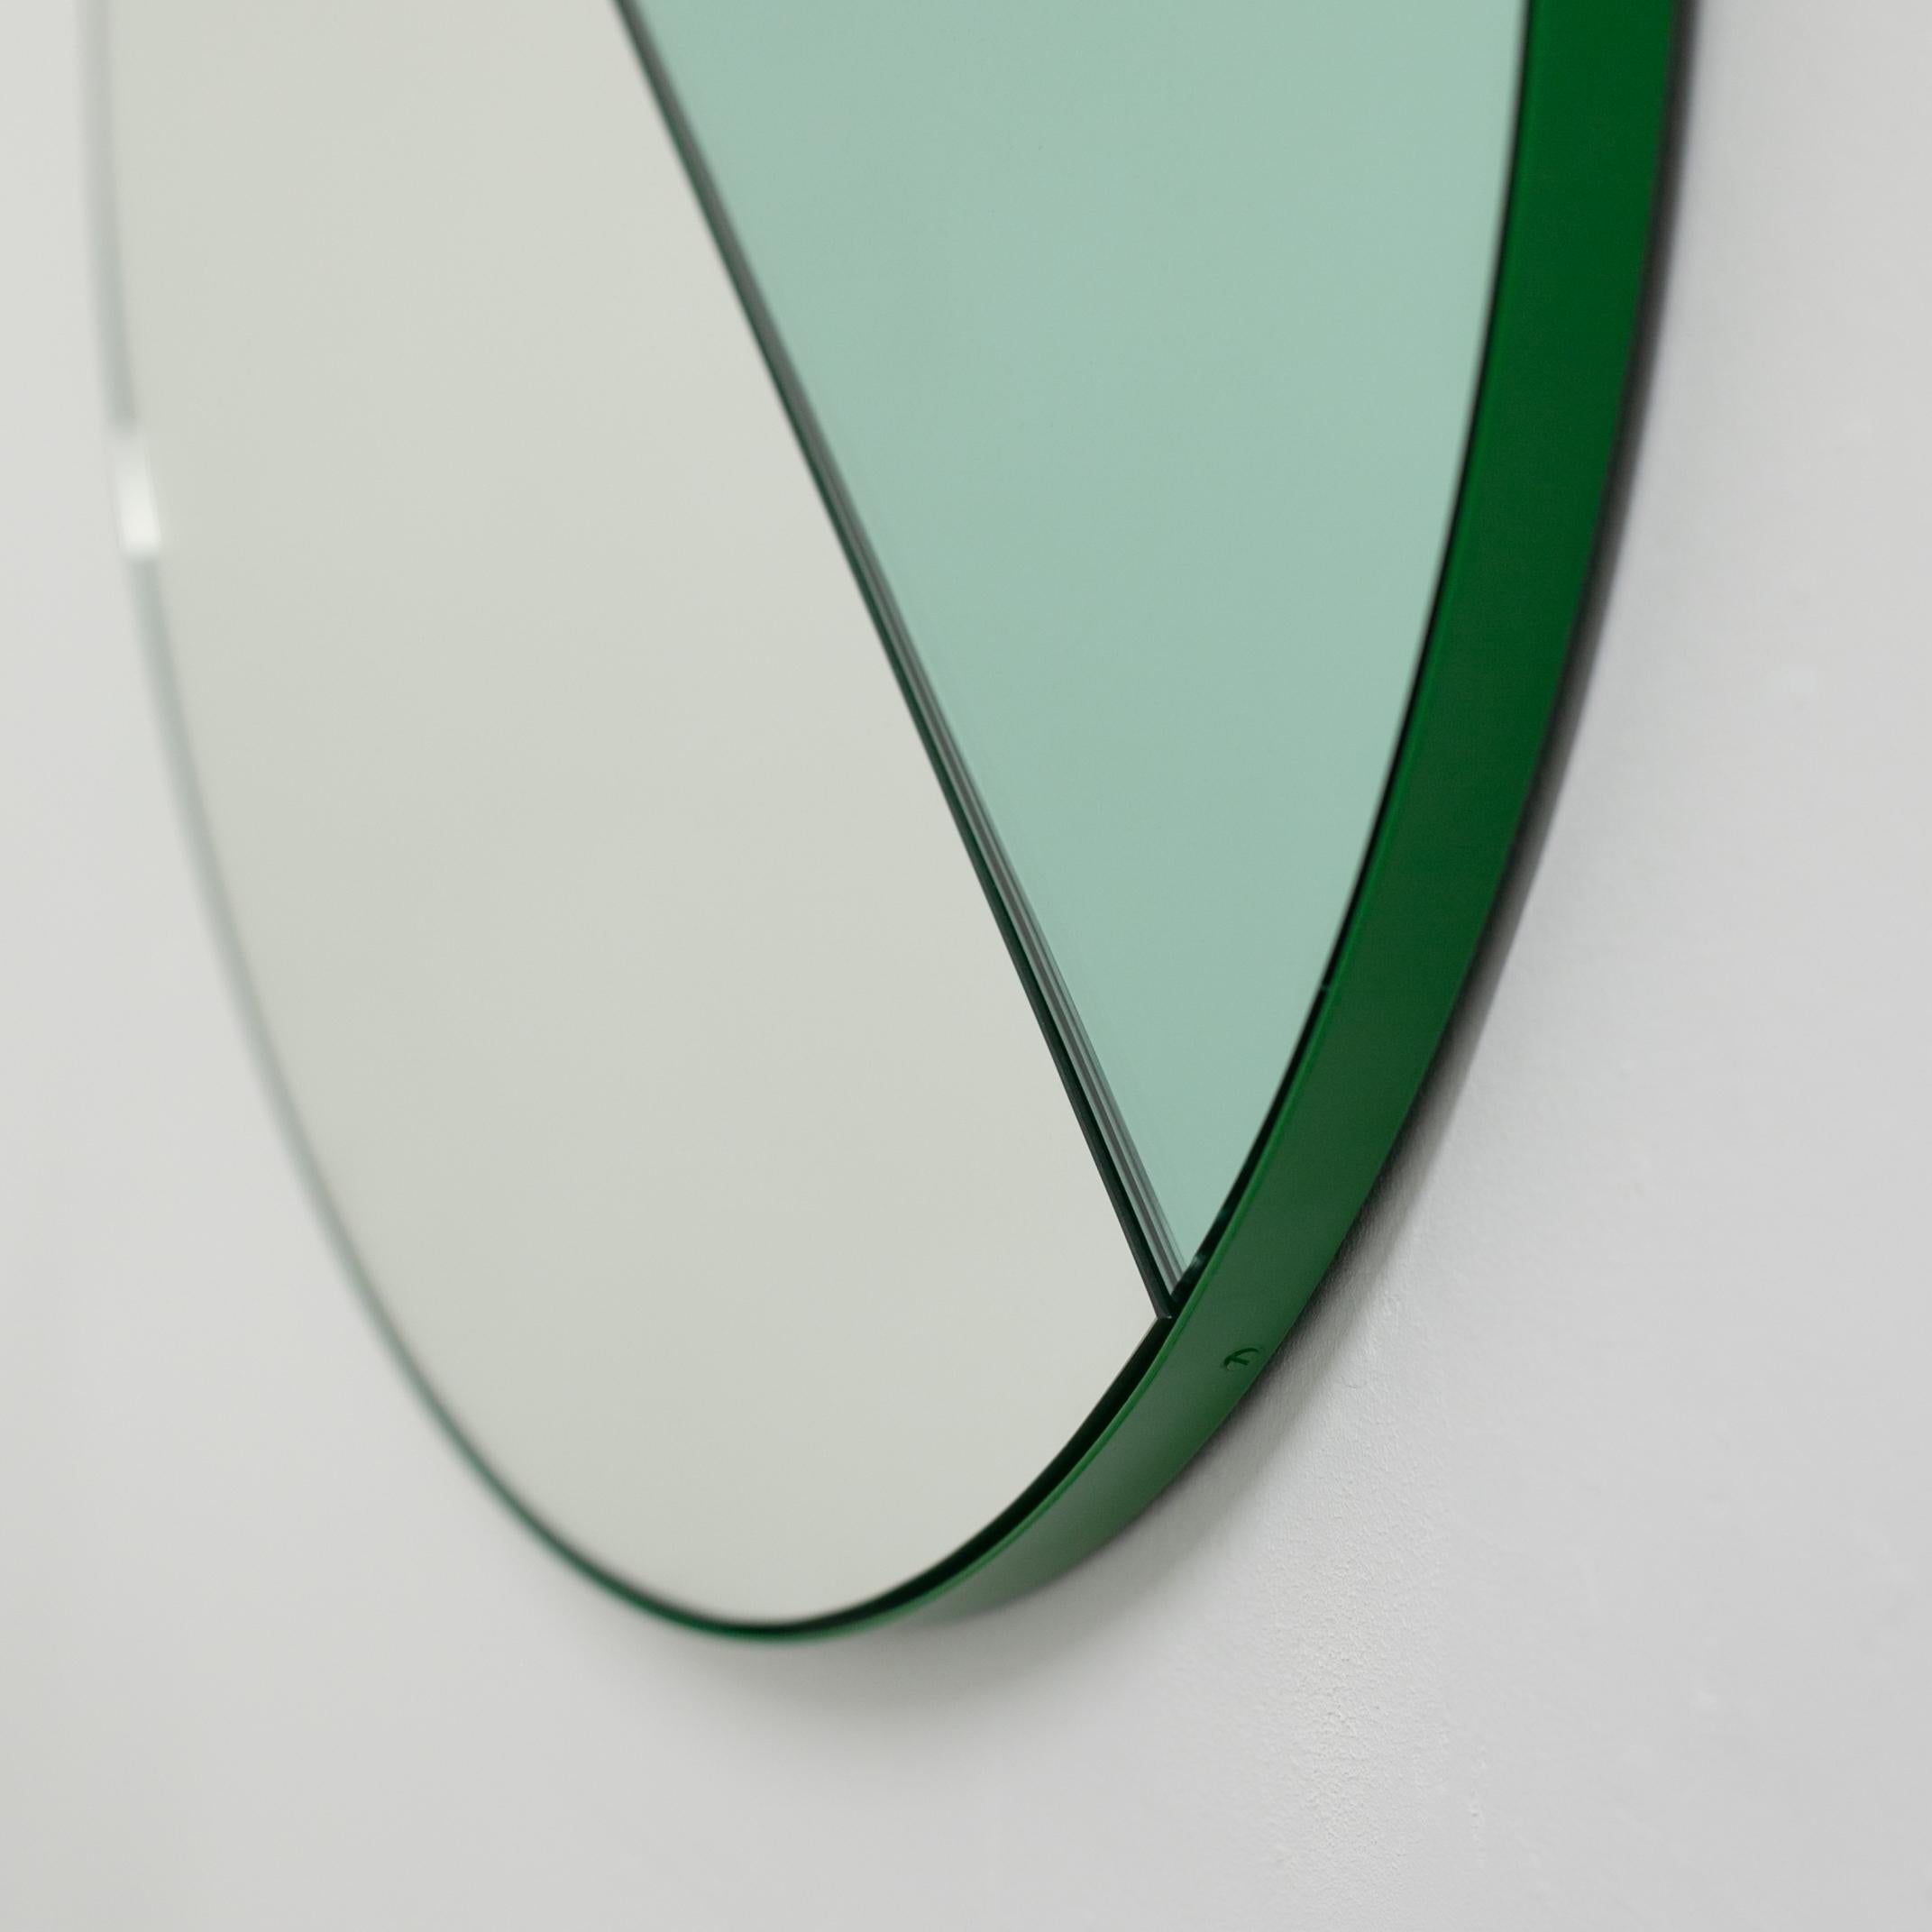 Orbis Dualis Mixed 'Green + Silver' Round Mirror with Green Frame, Medium 5